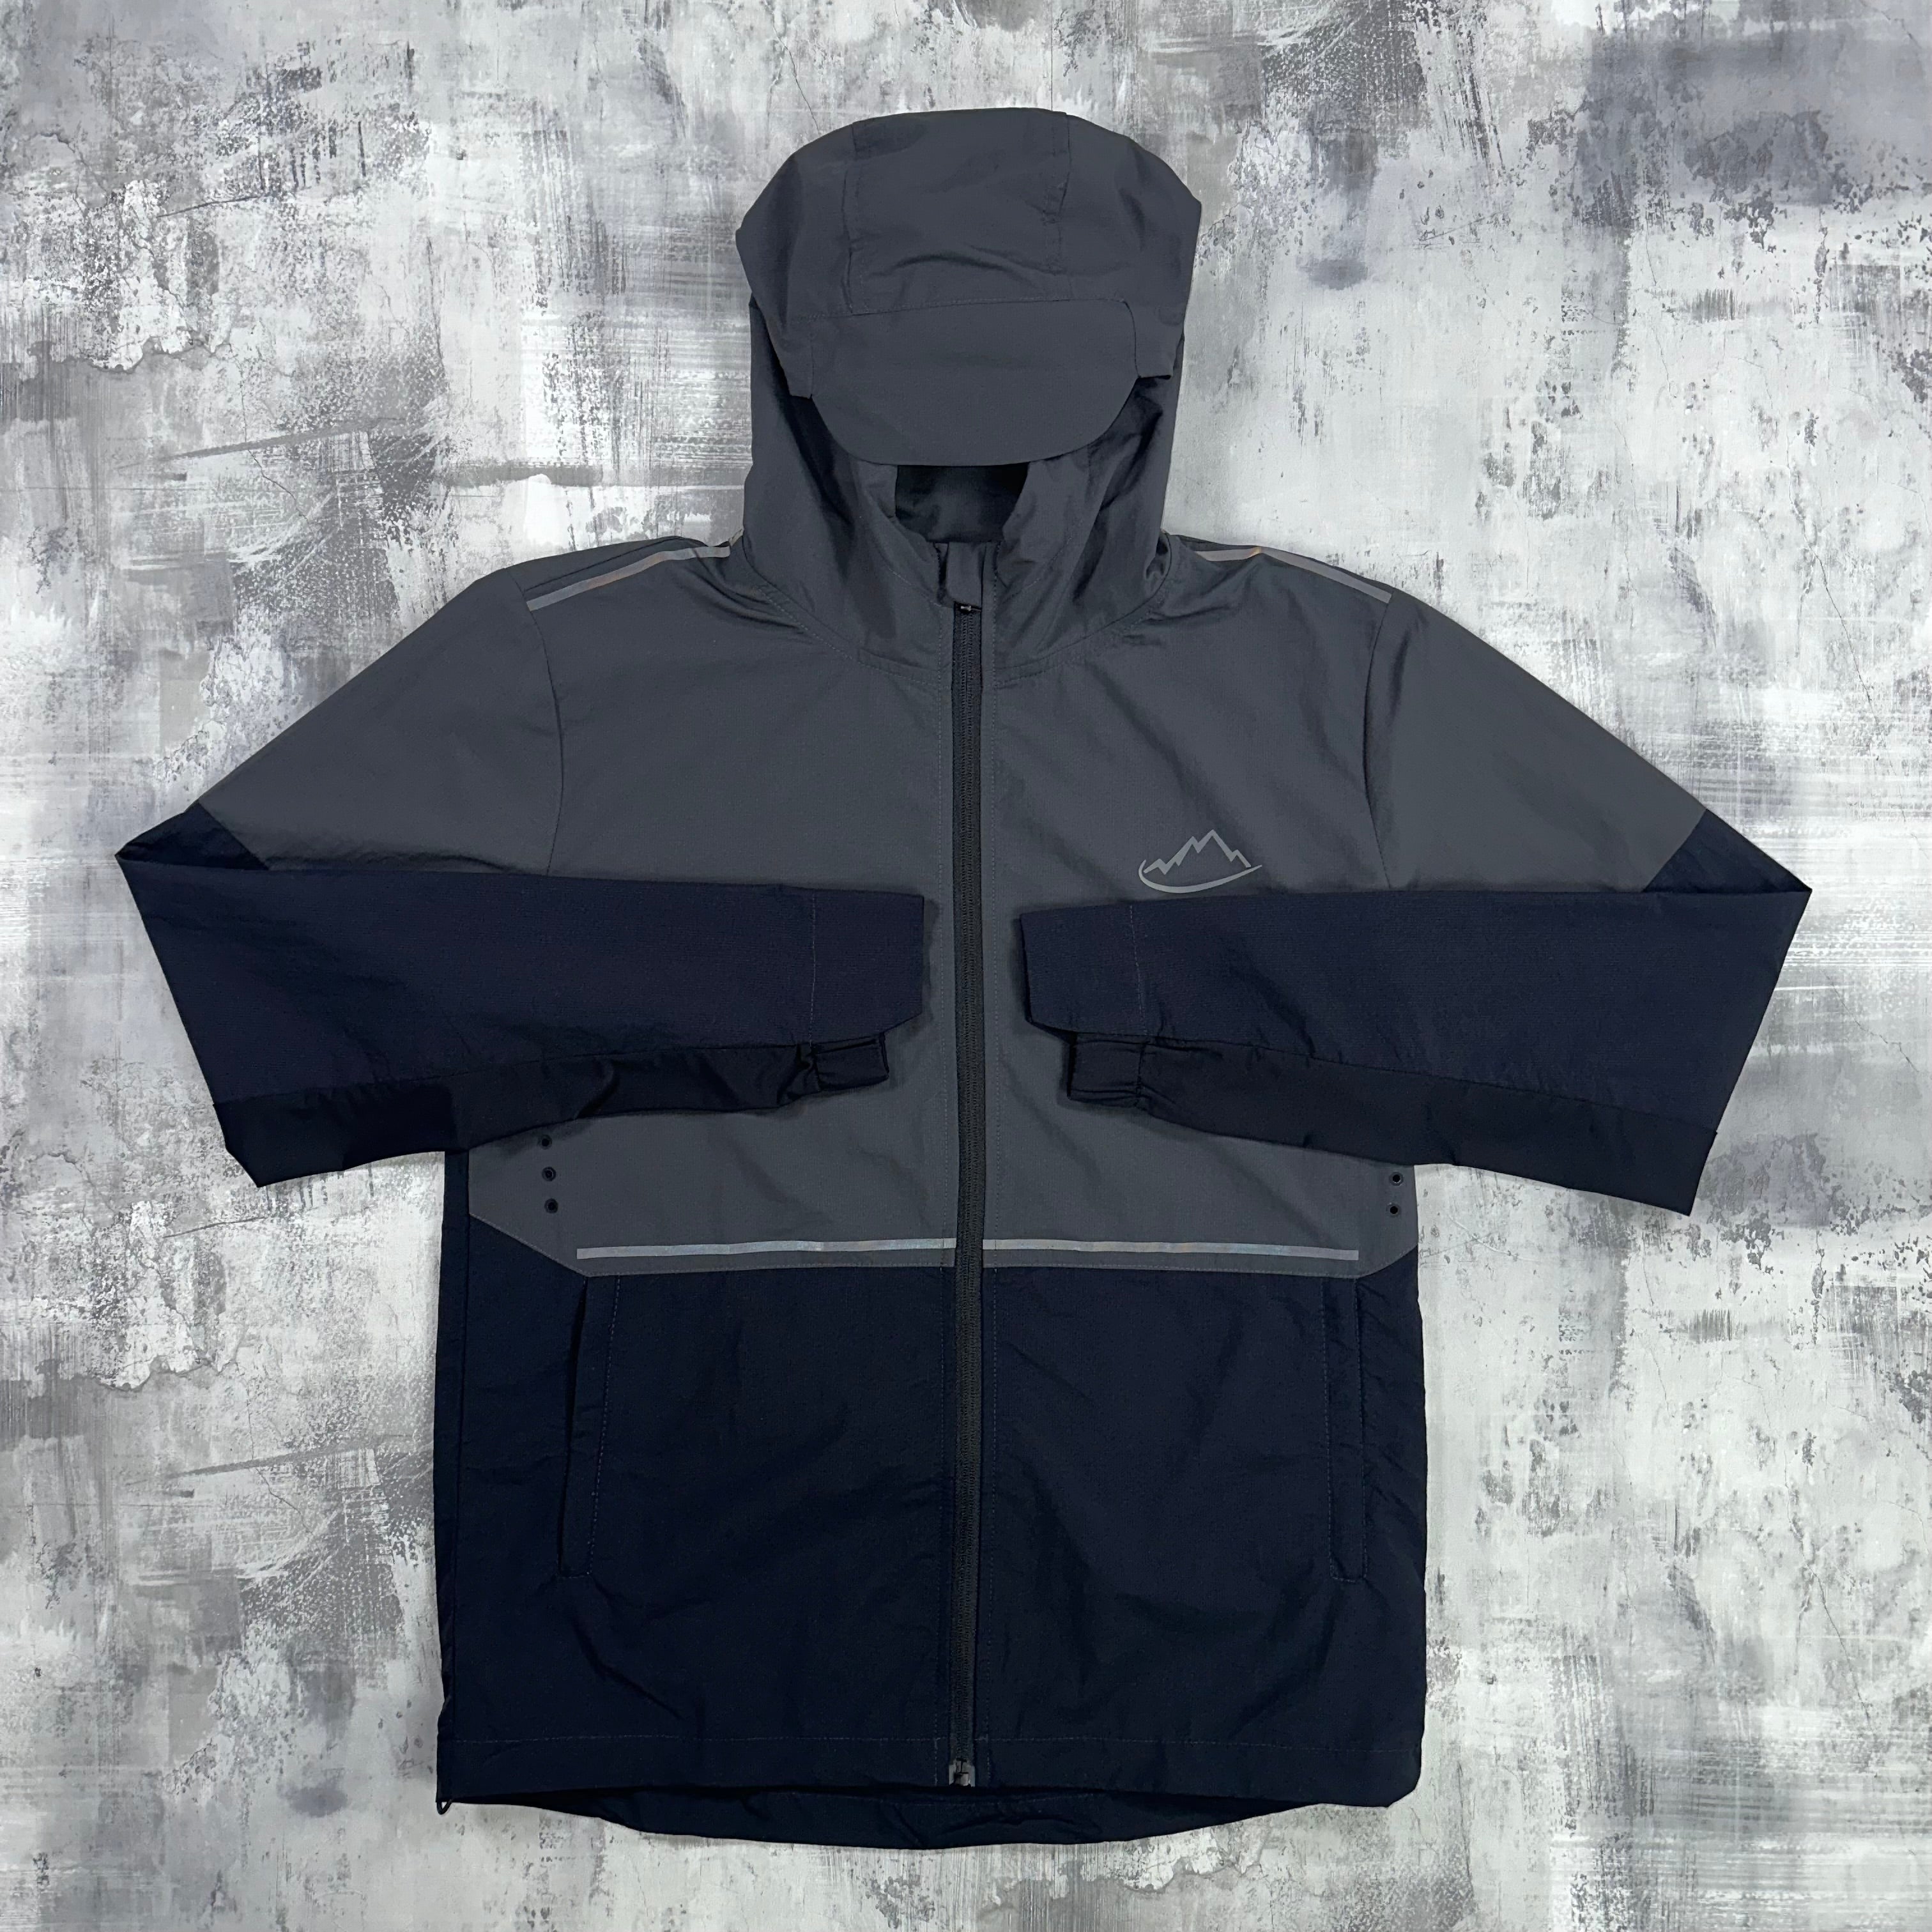 Adapt to Black / Grey Pro Max Jacket